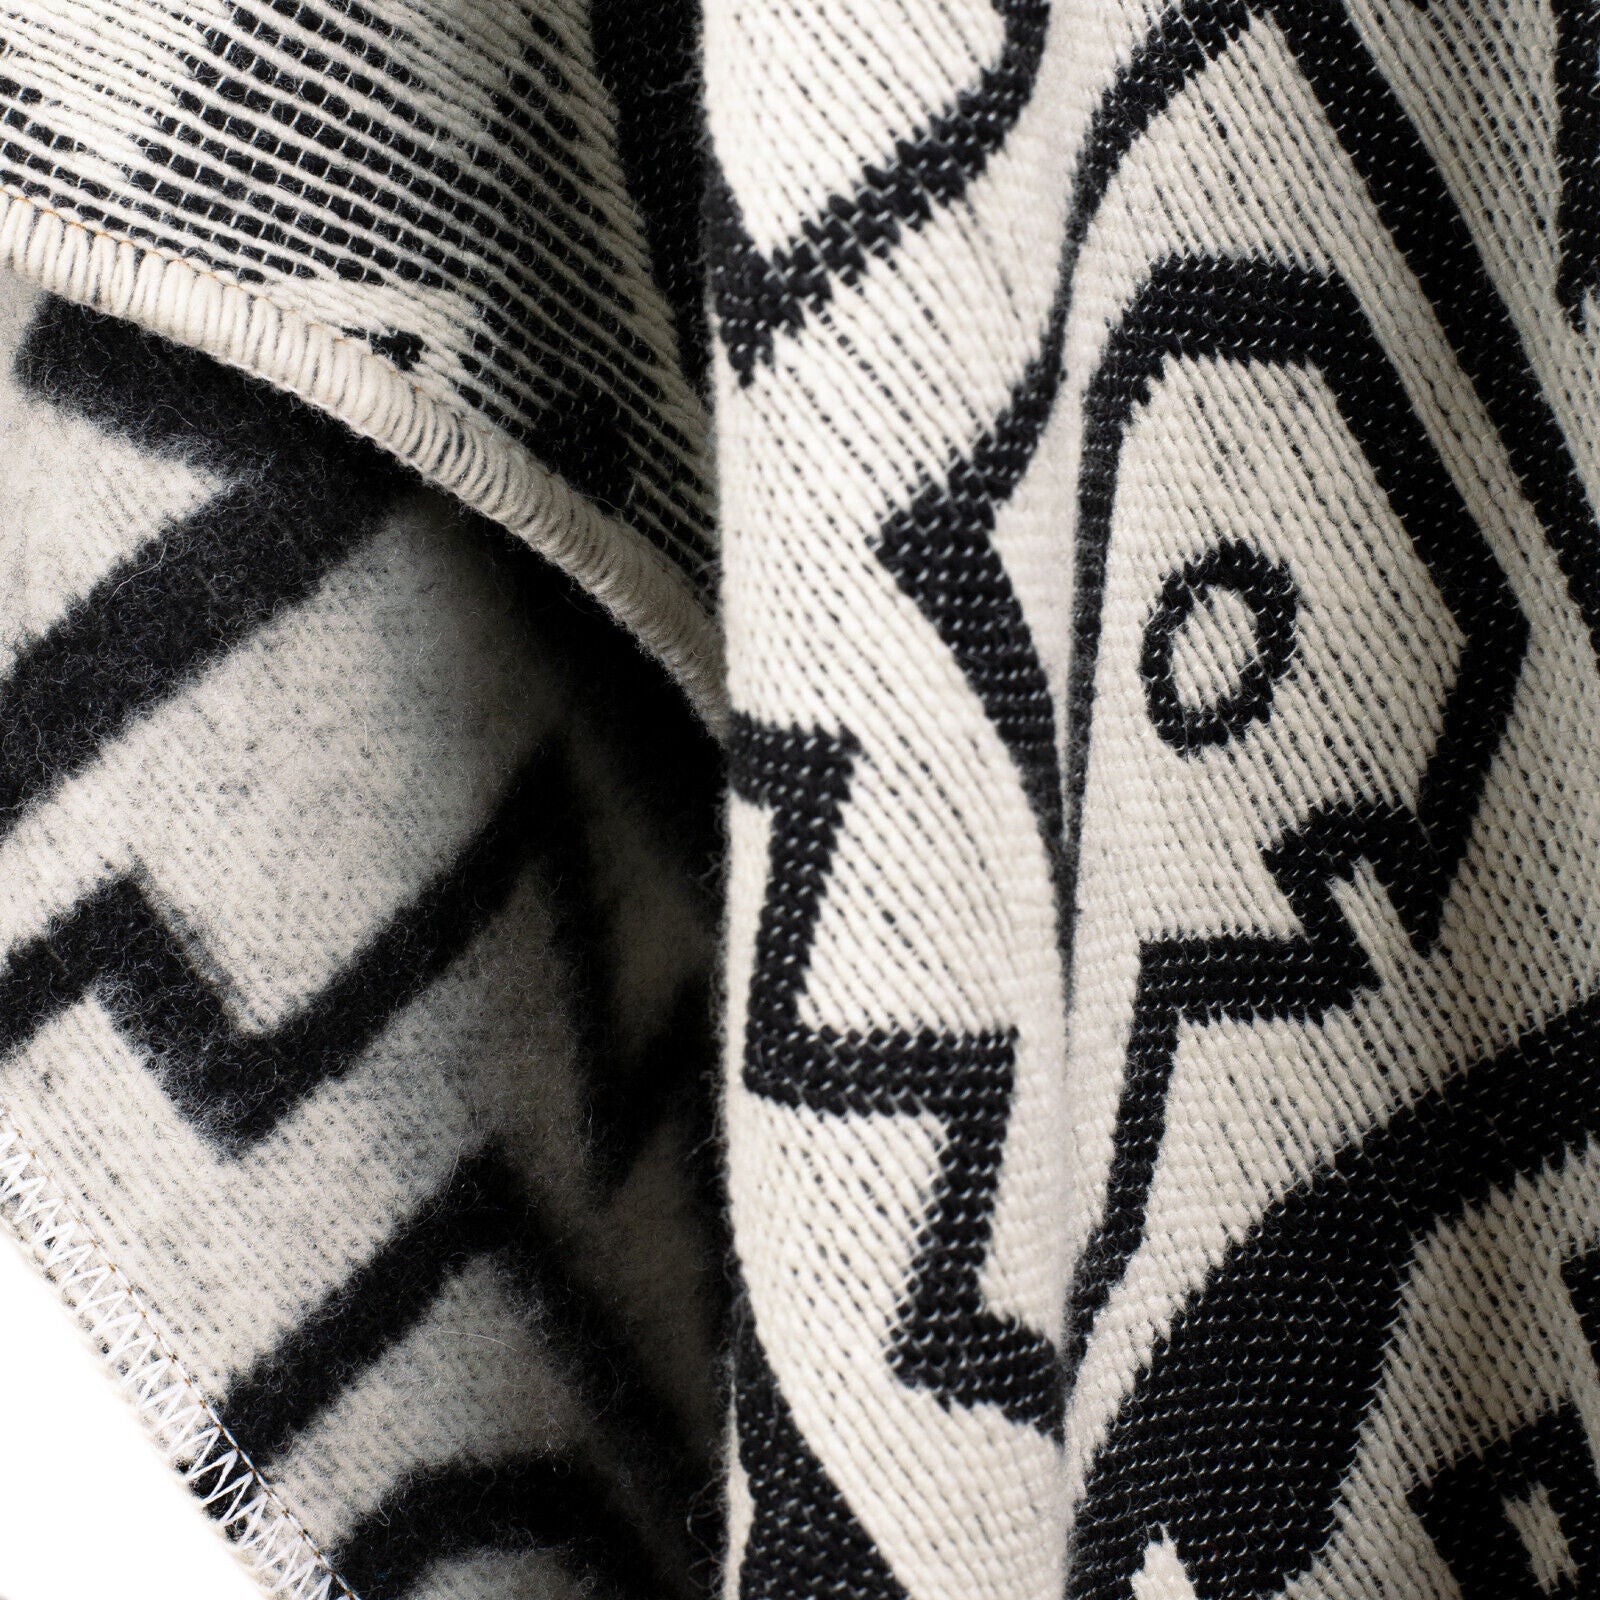 Chiriaco - Llama Wool Unisex South American Handwoven Thick Hooded Poncho - Aztec animal pattern - black-white